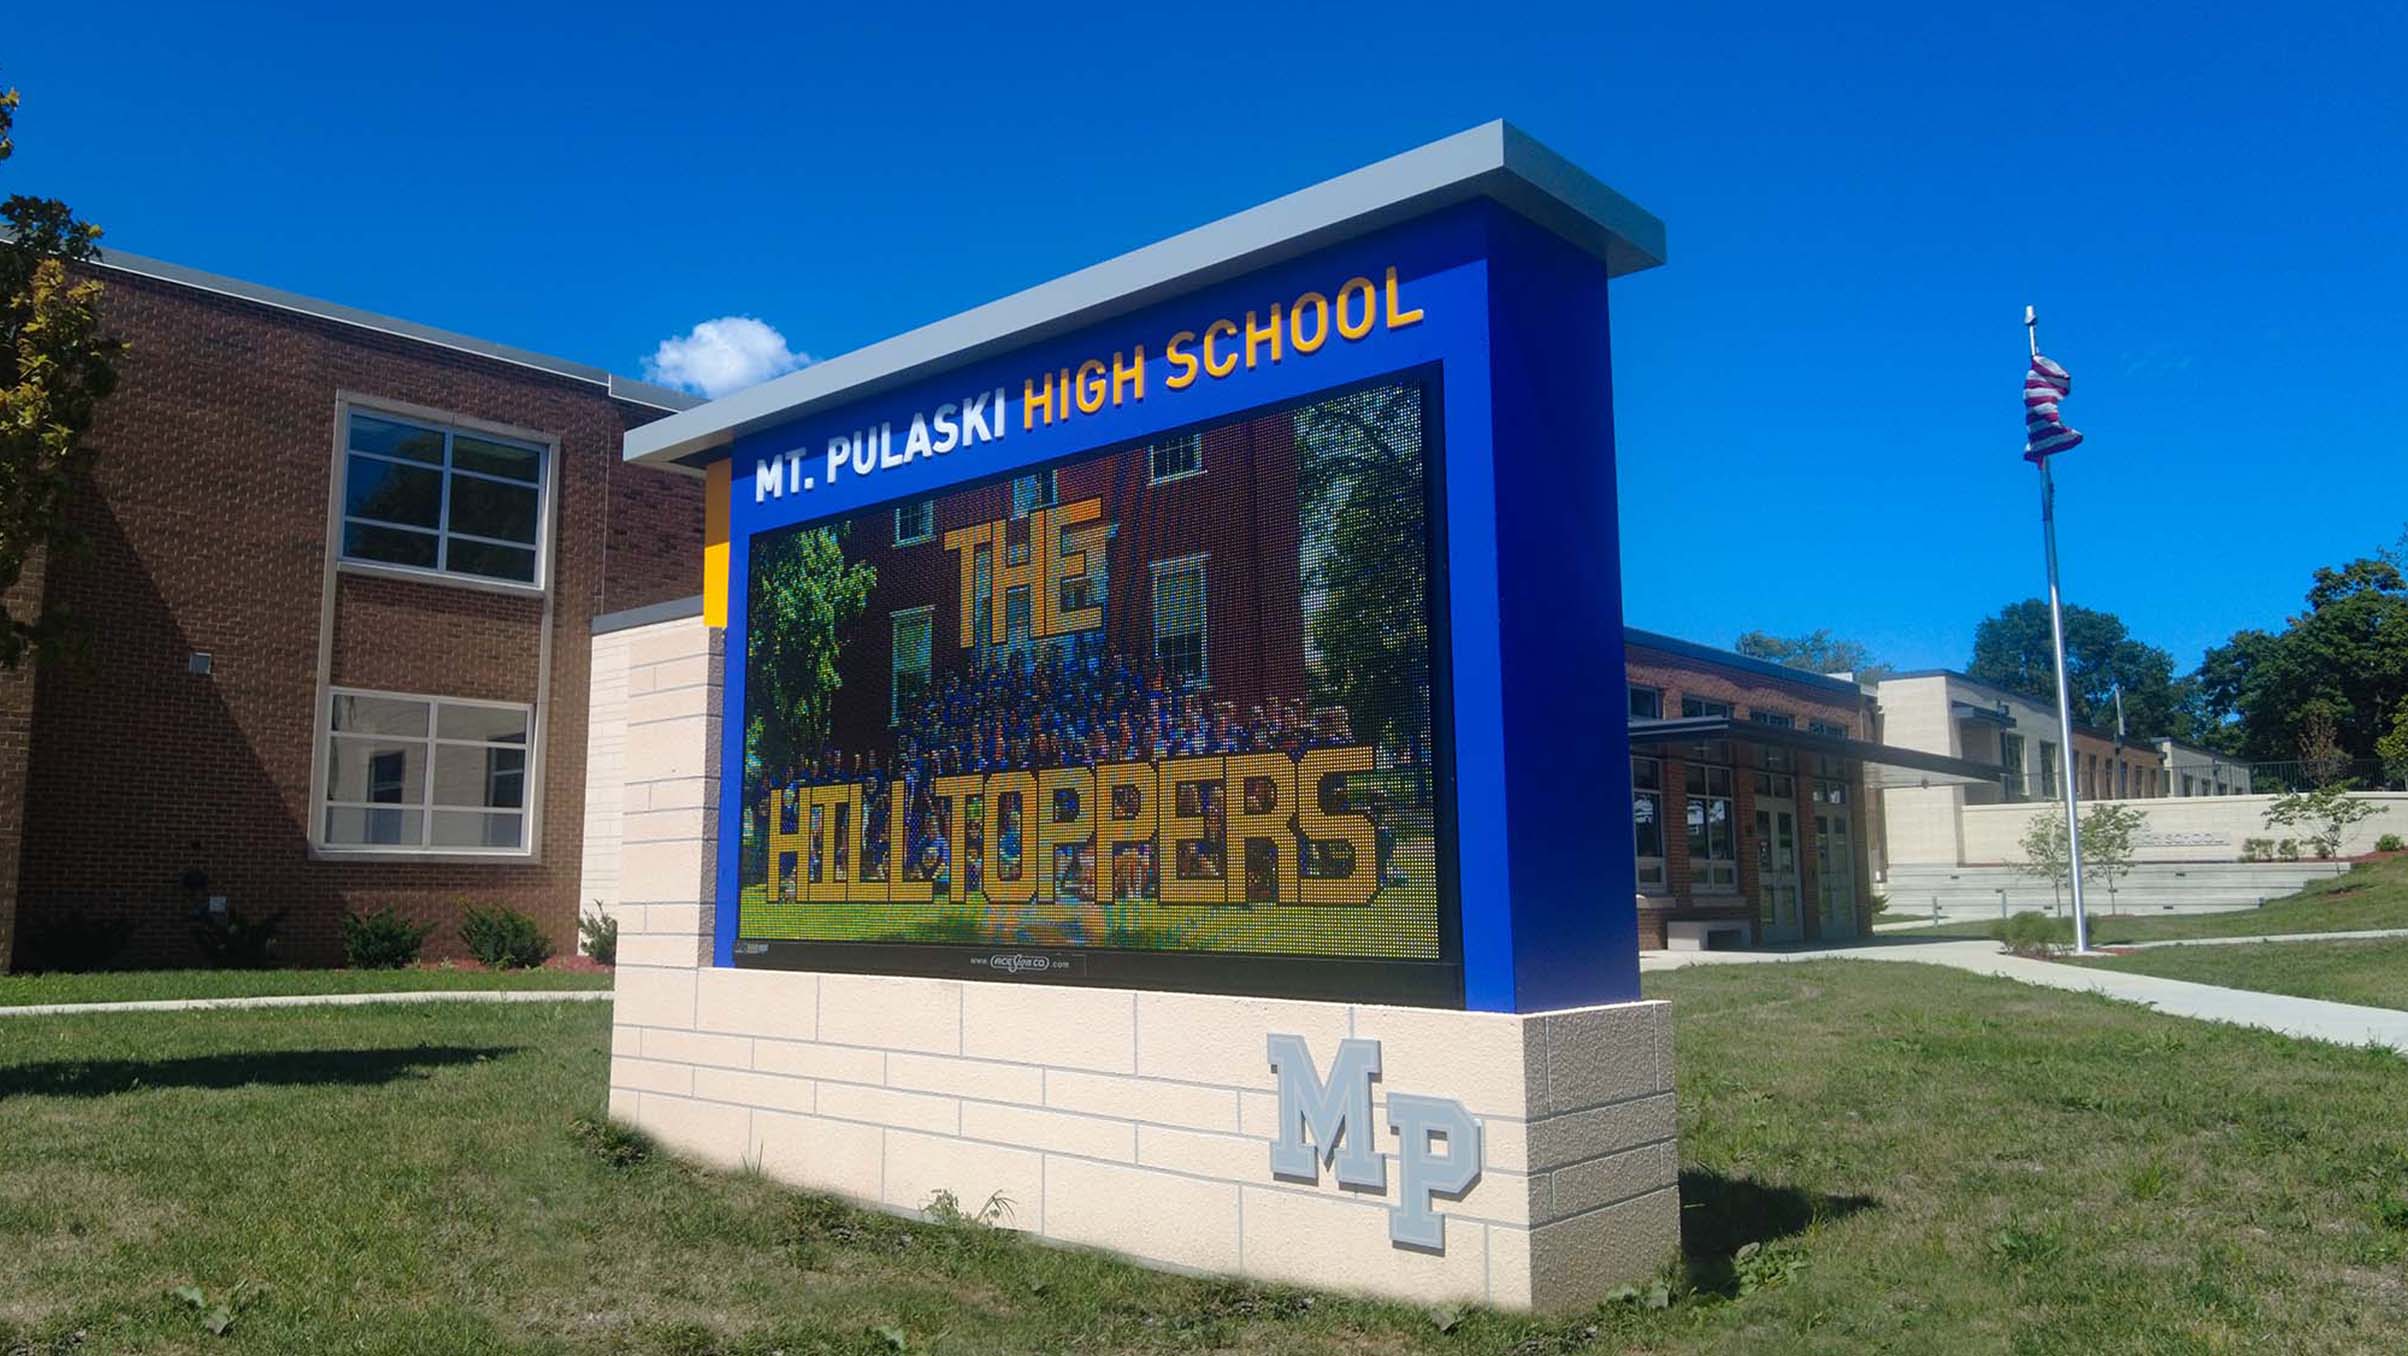 Mt. Pulaski High School